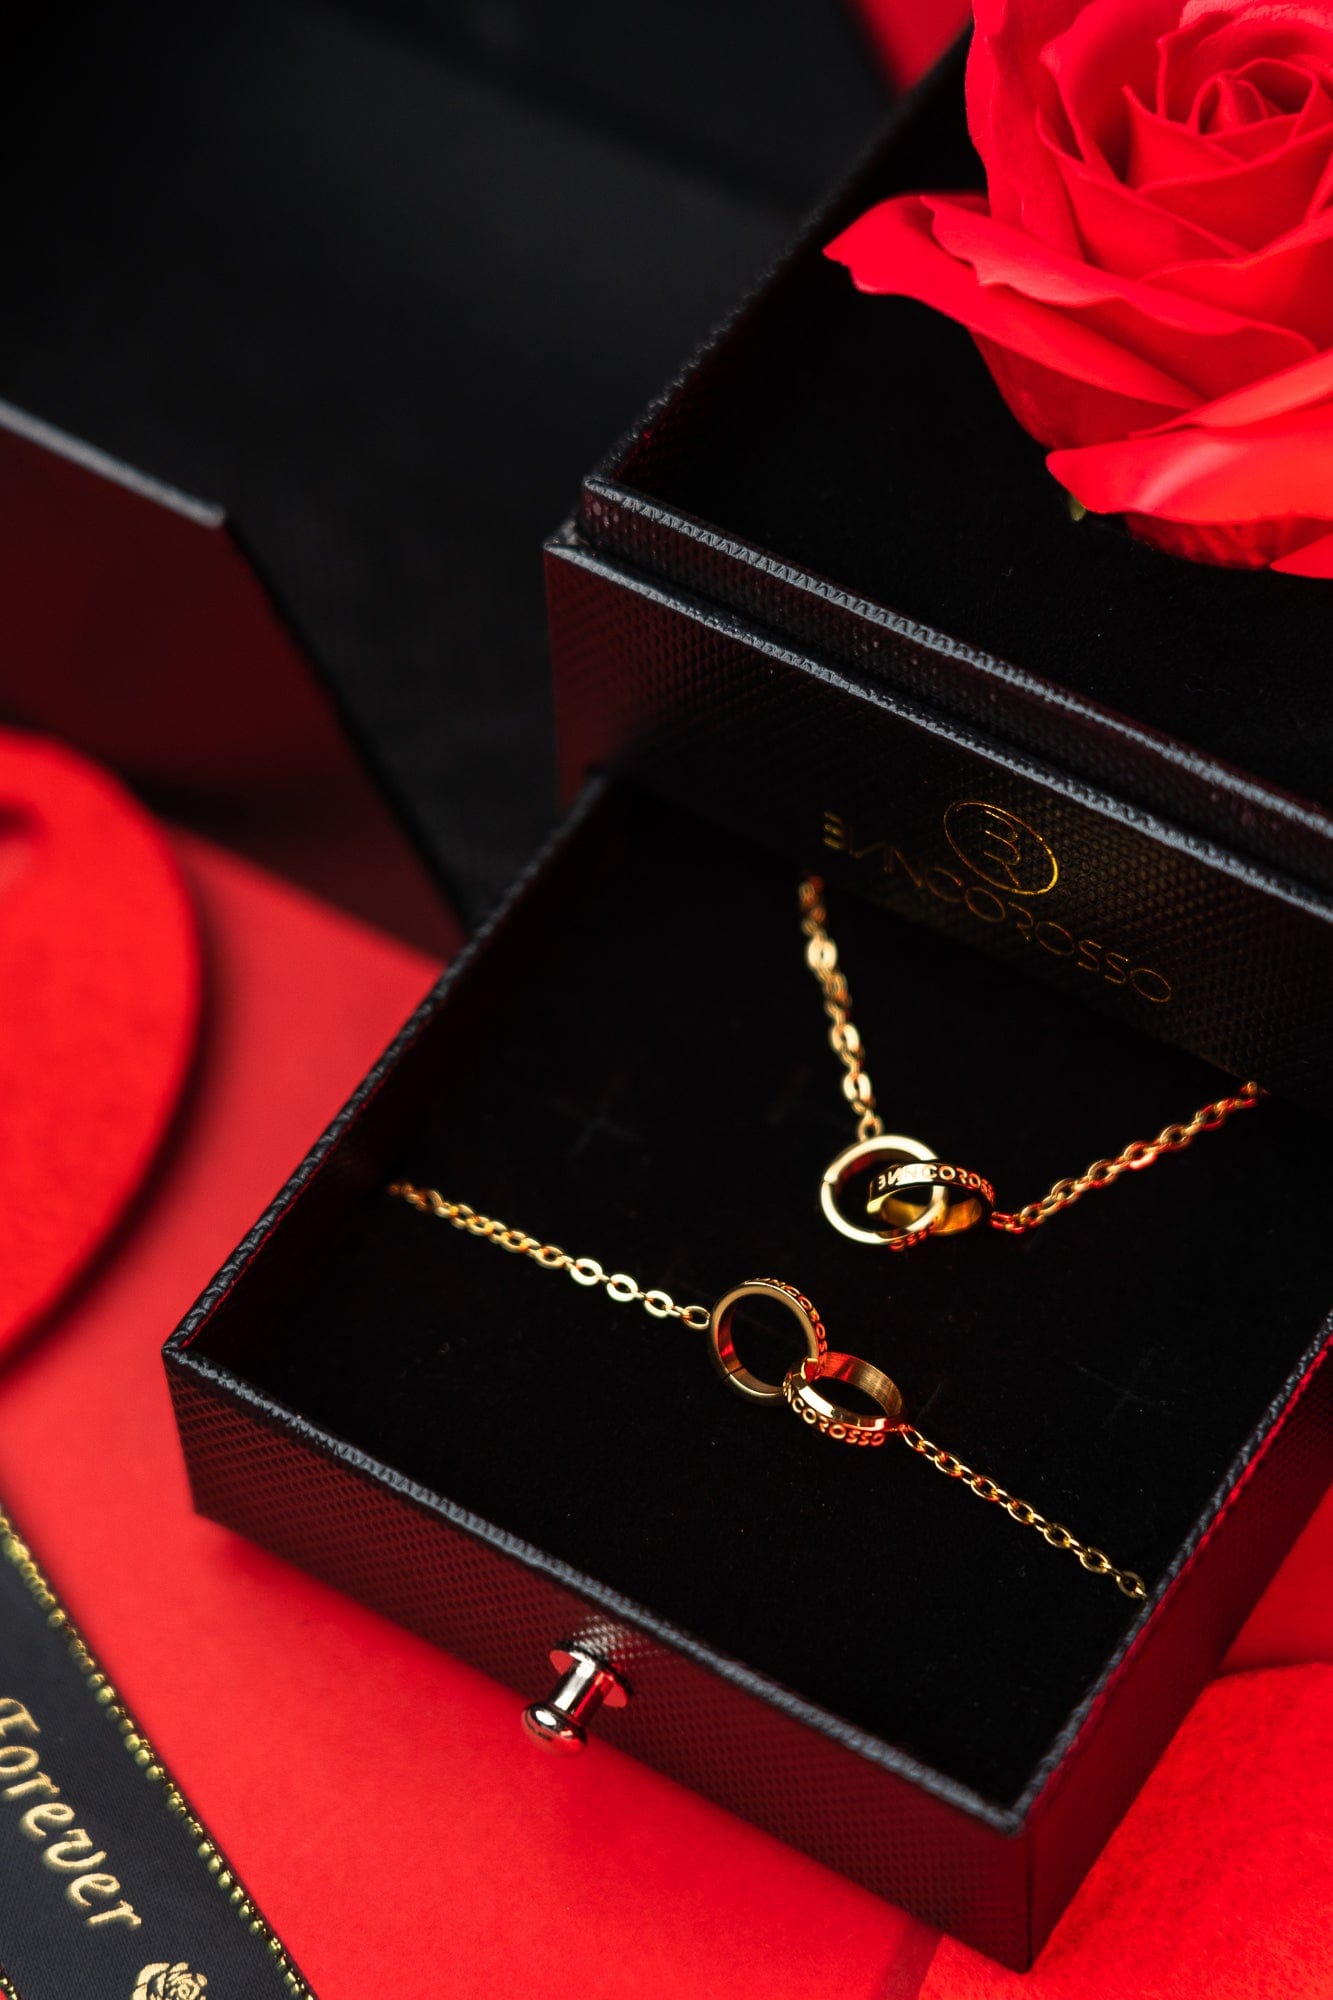 bianco rosso Rose Box Eternity Set / Rose Gold Valentine's Gift Box cyprus greece jewelry gift free shipping europe worldwide